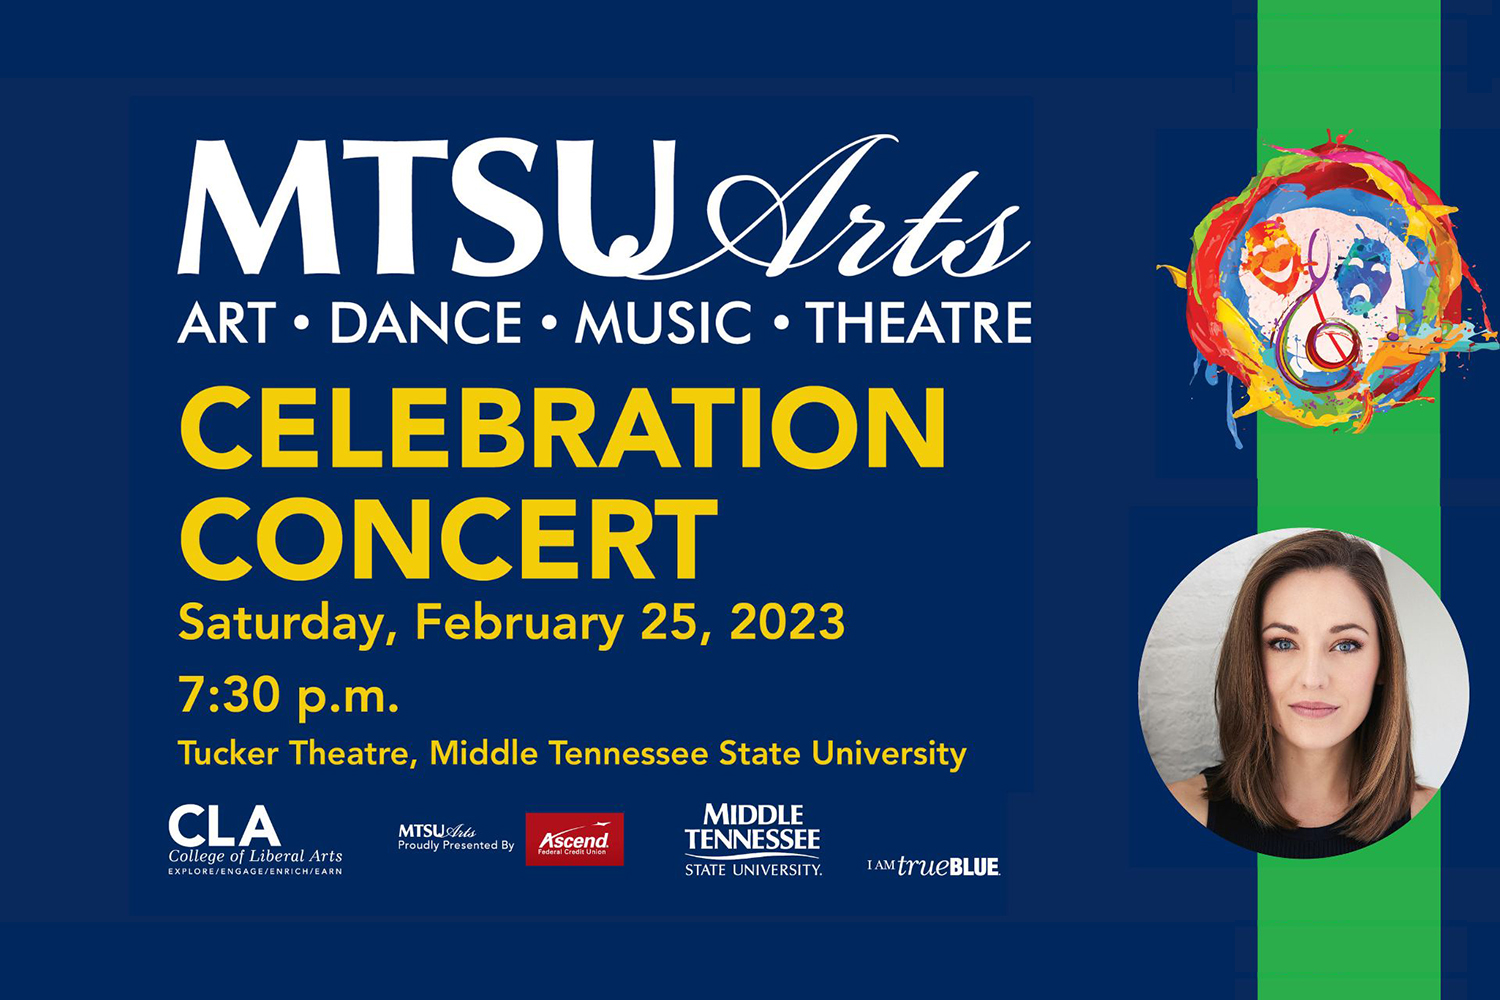 MTSU Arts Celebration Coner sd=jiejfjfjj 